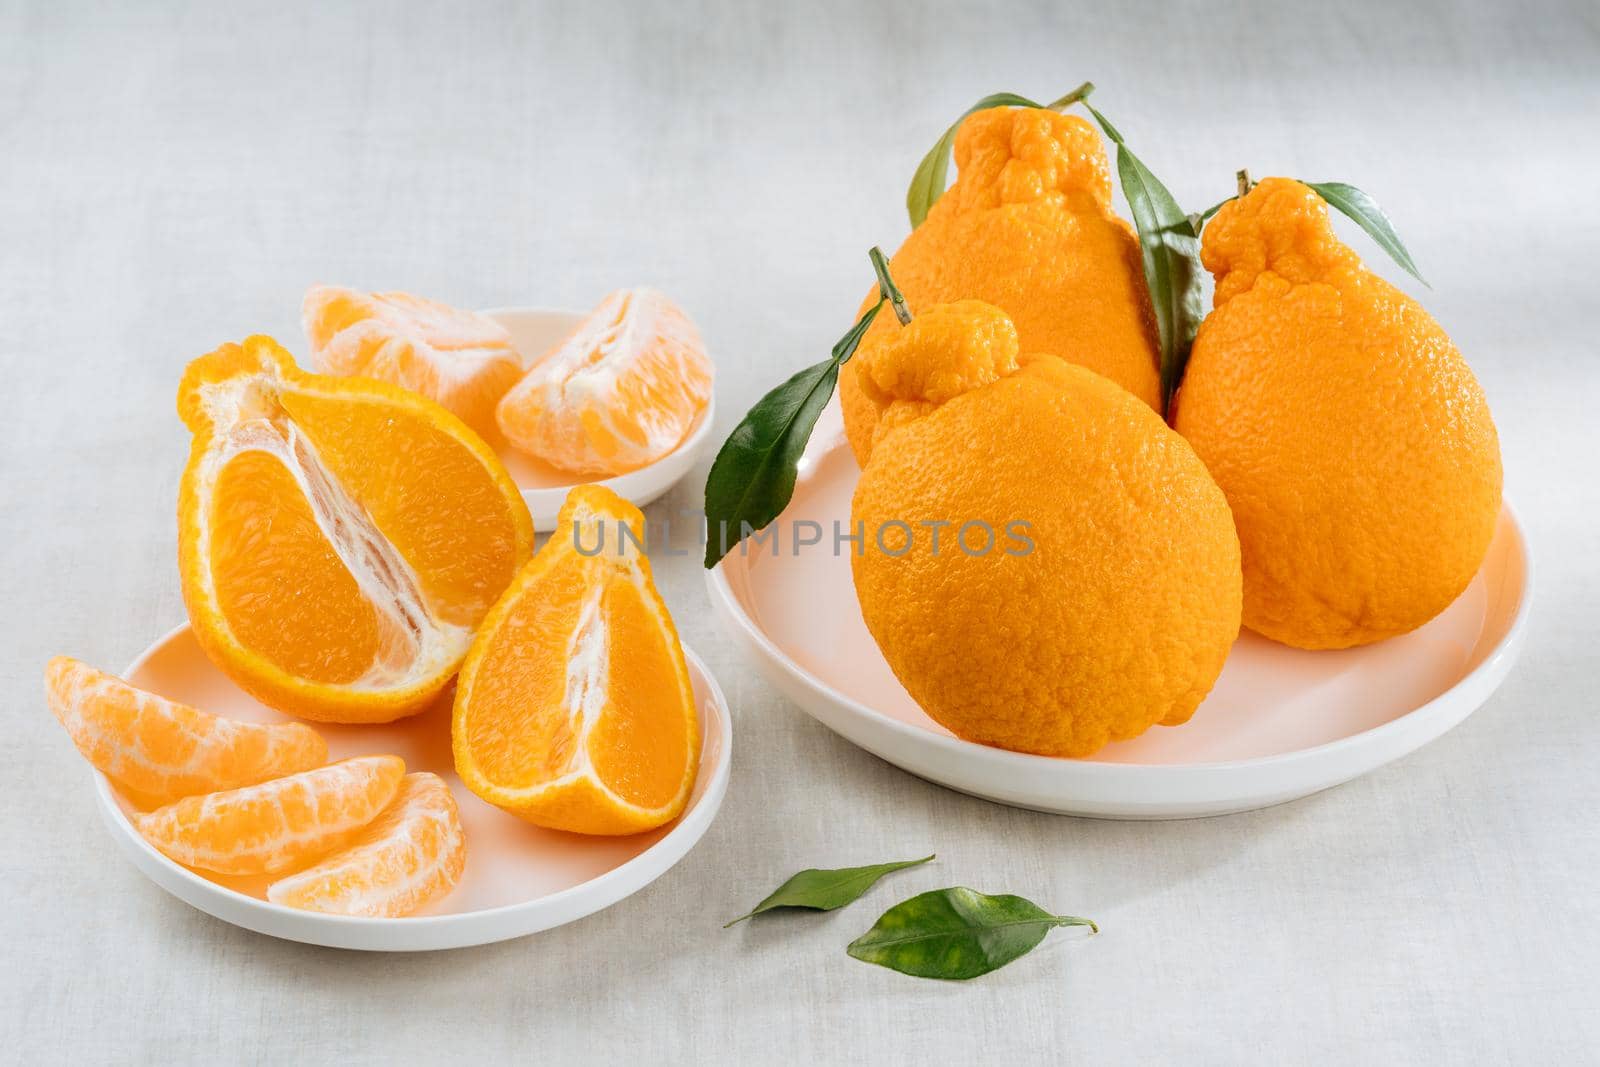 Fresh orange fruits with green leaves